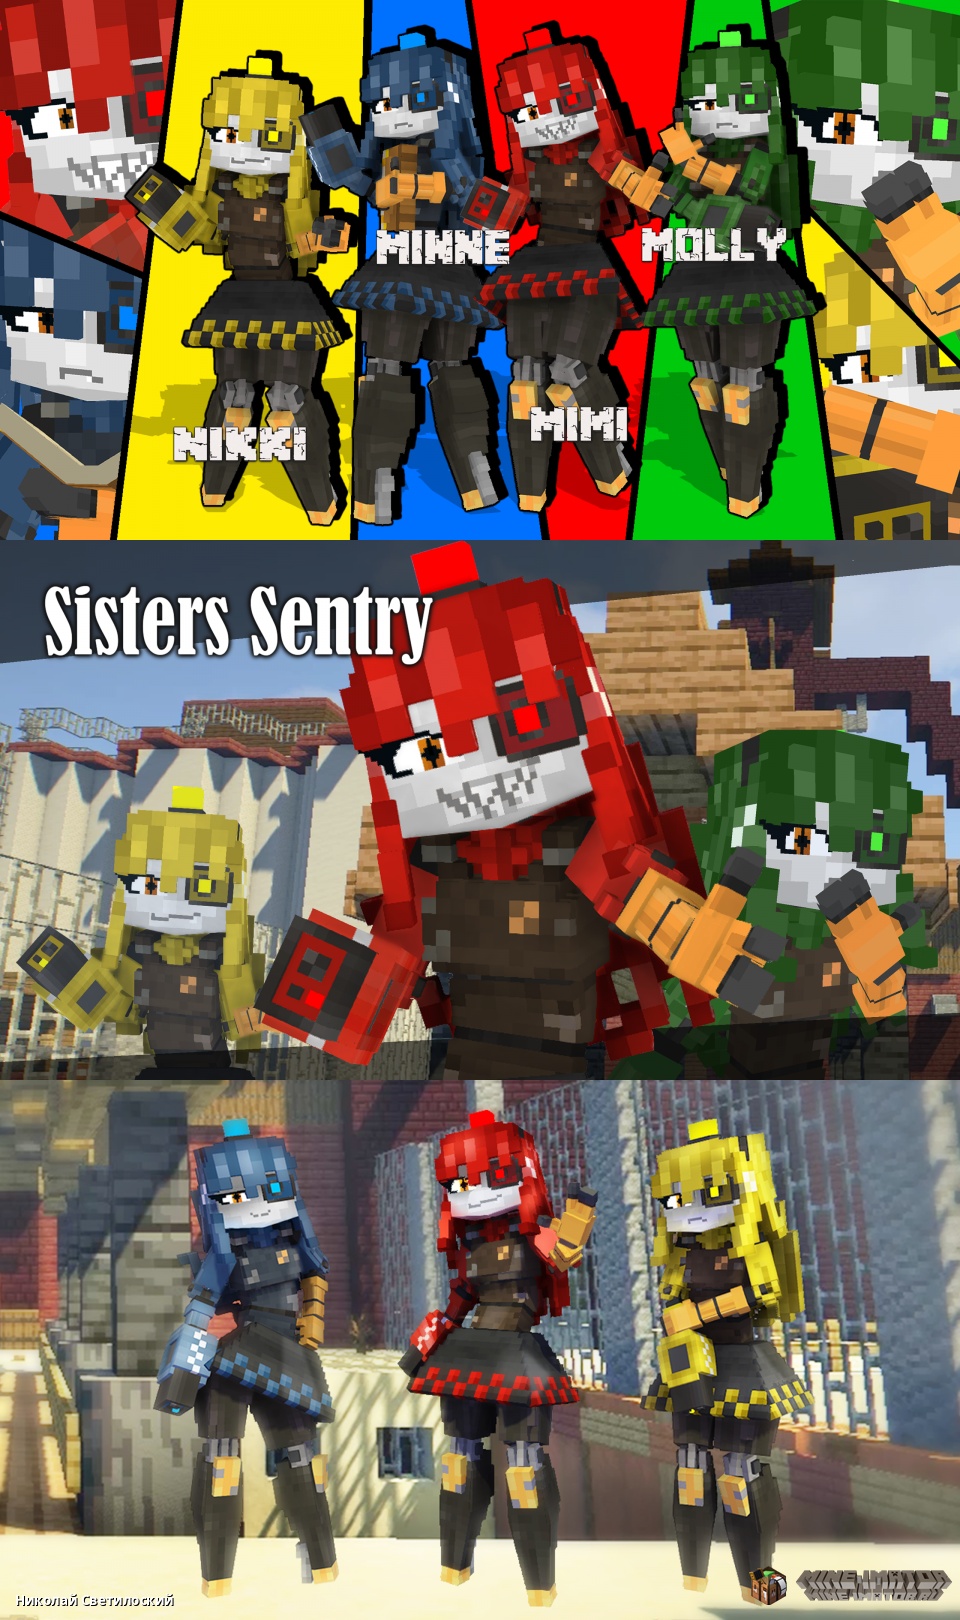 Sister Sentry